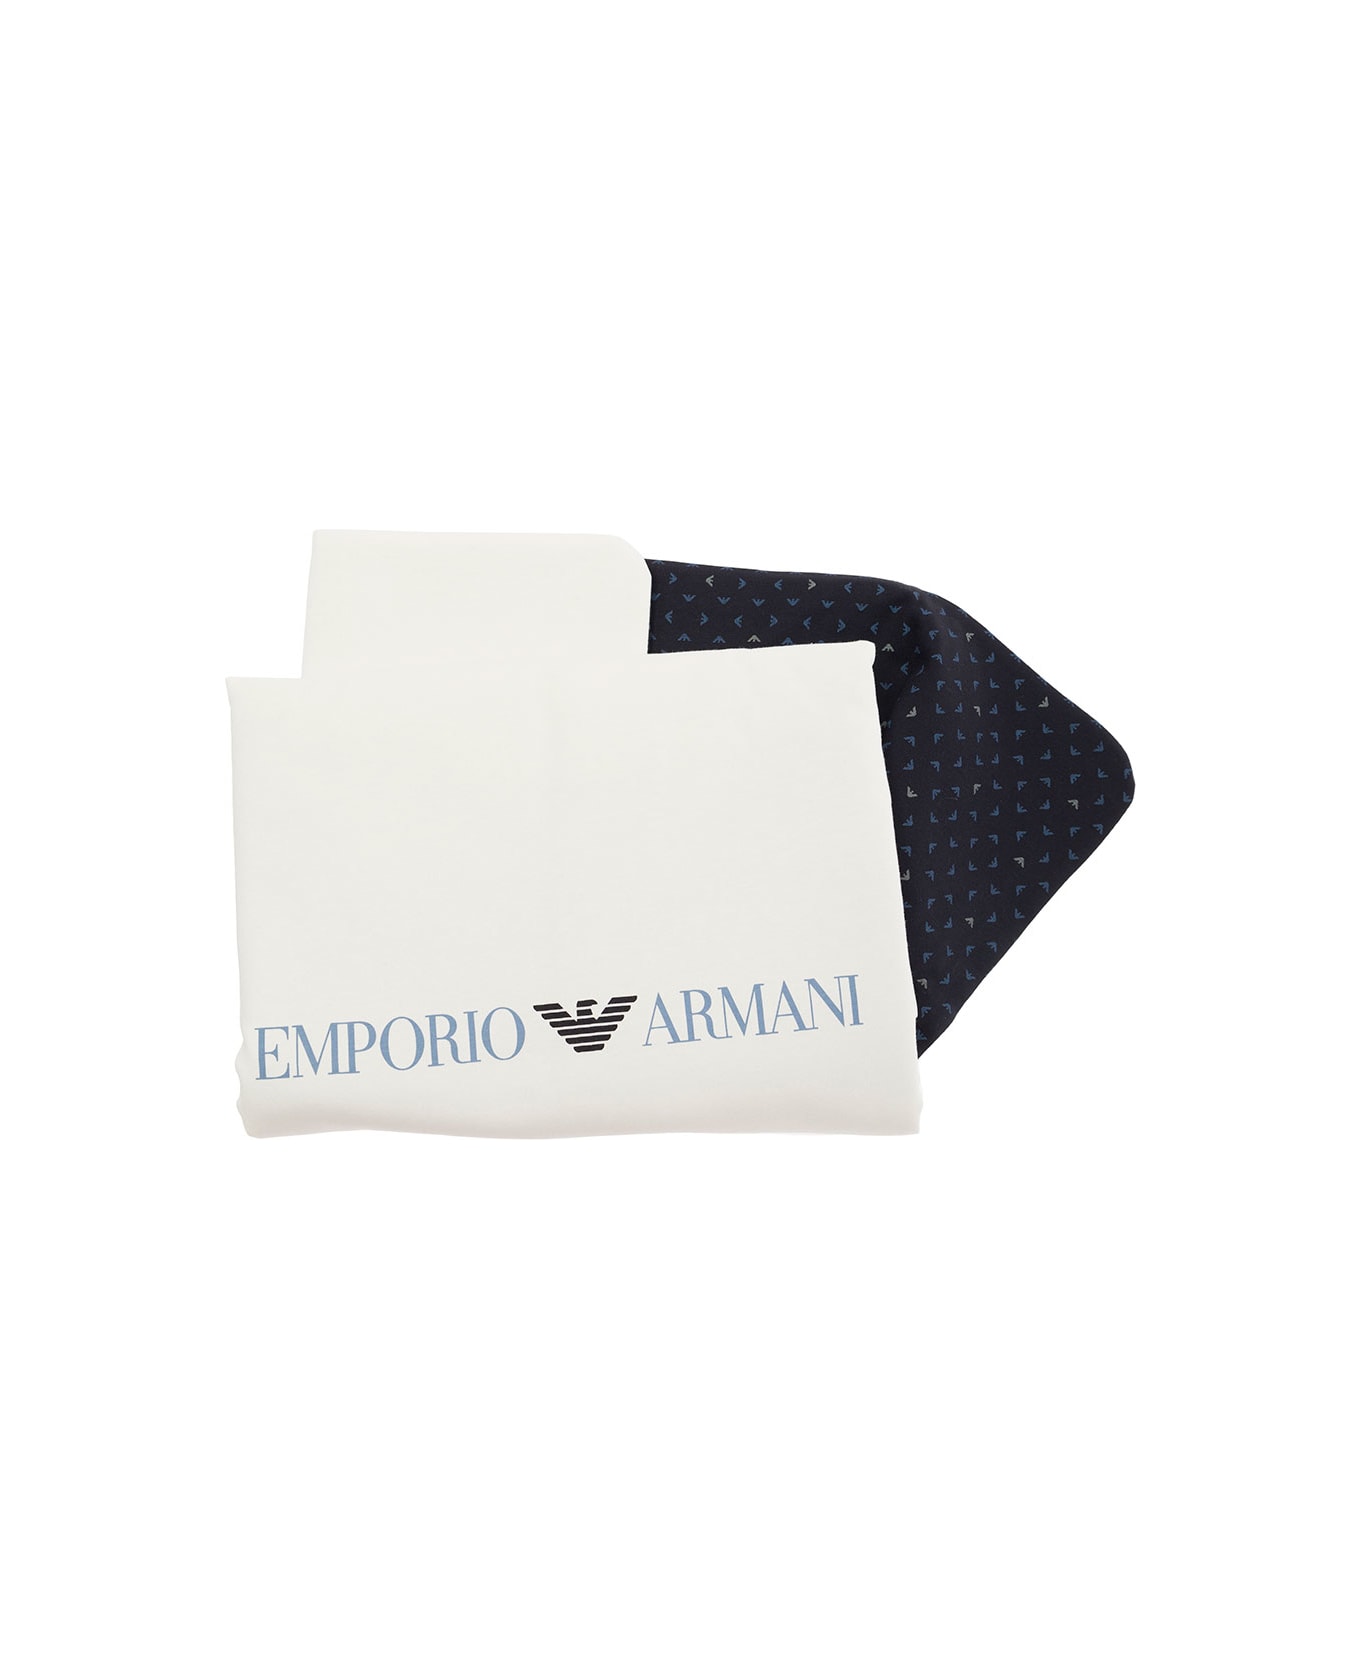 Emporio Armani White Blanket With Contrasting Logo Detail In Cotton - Blu